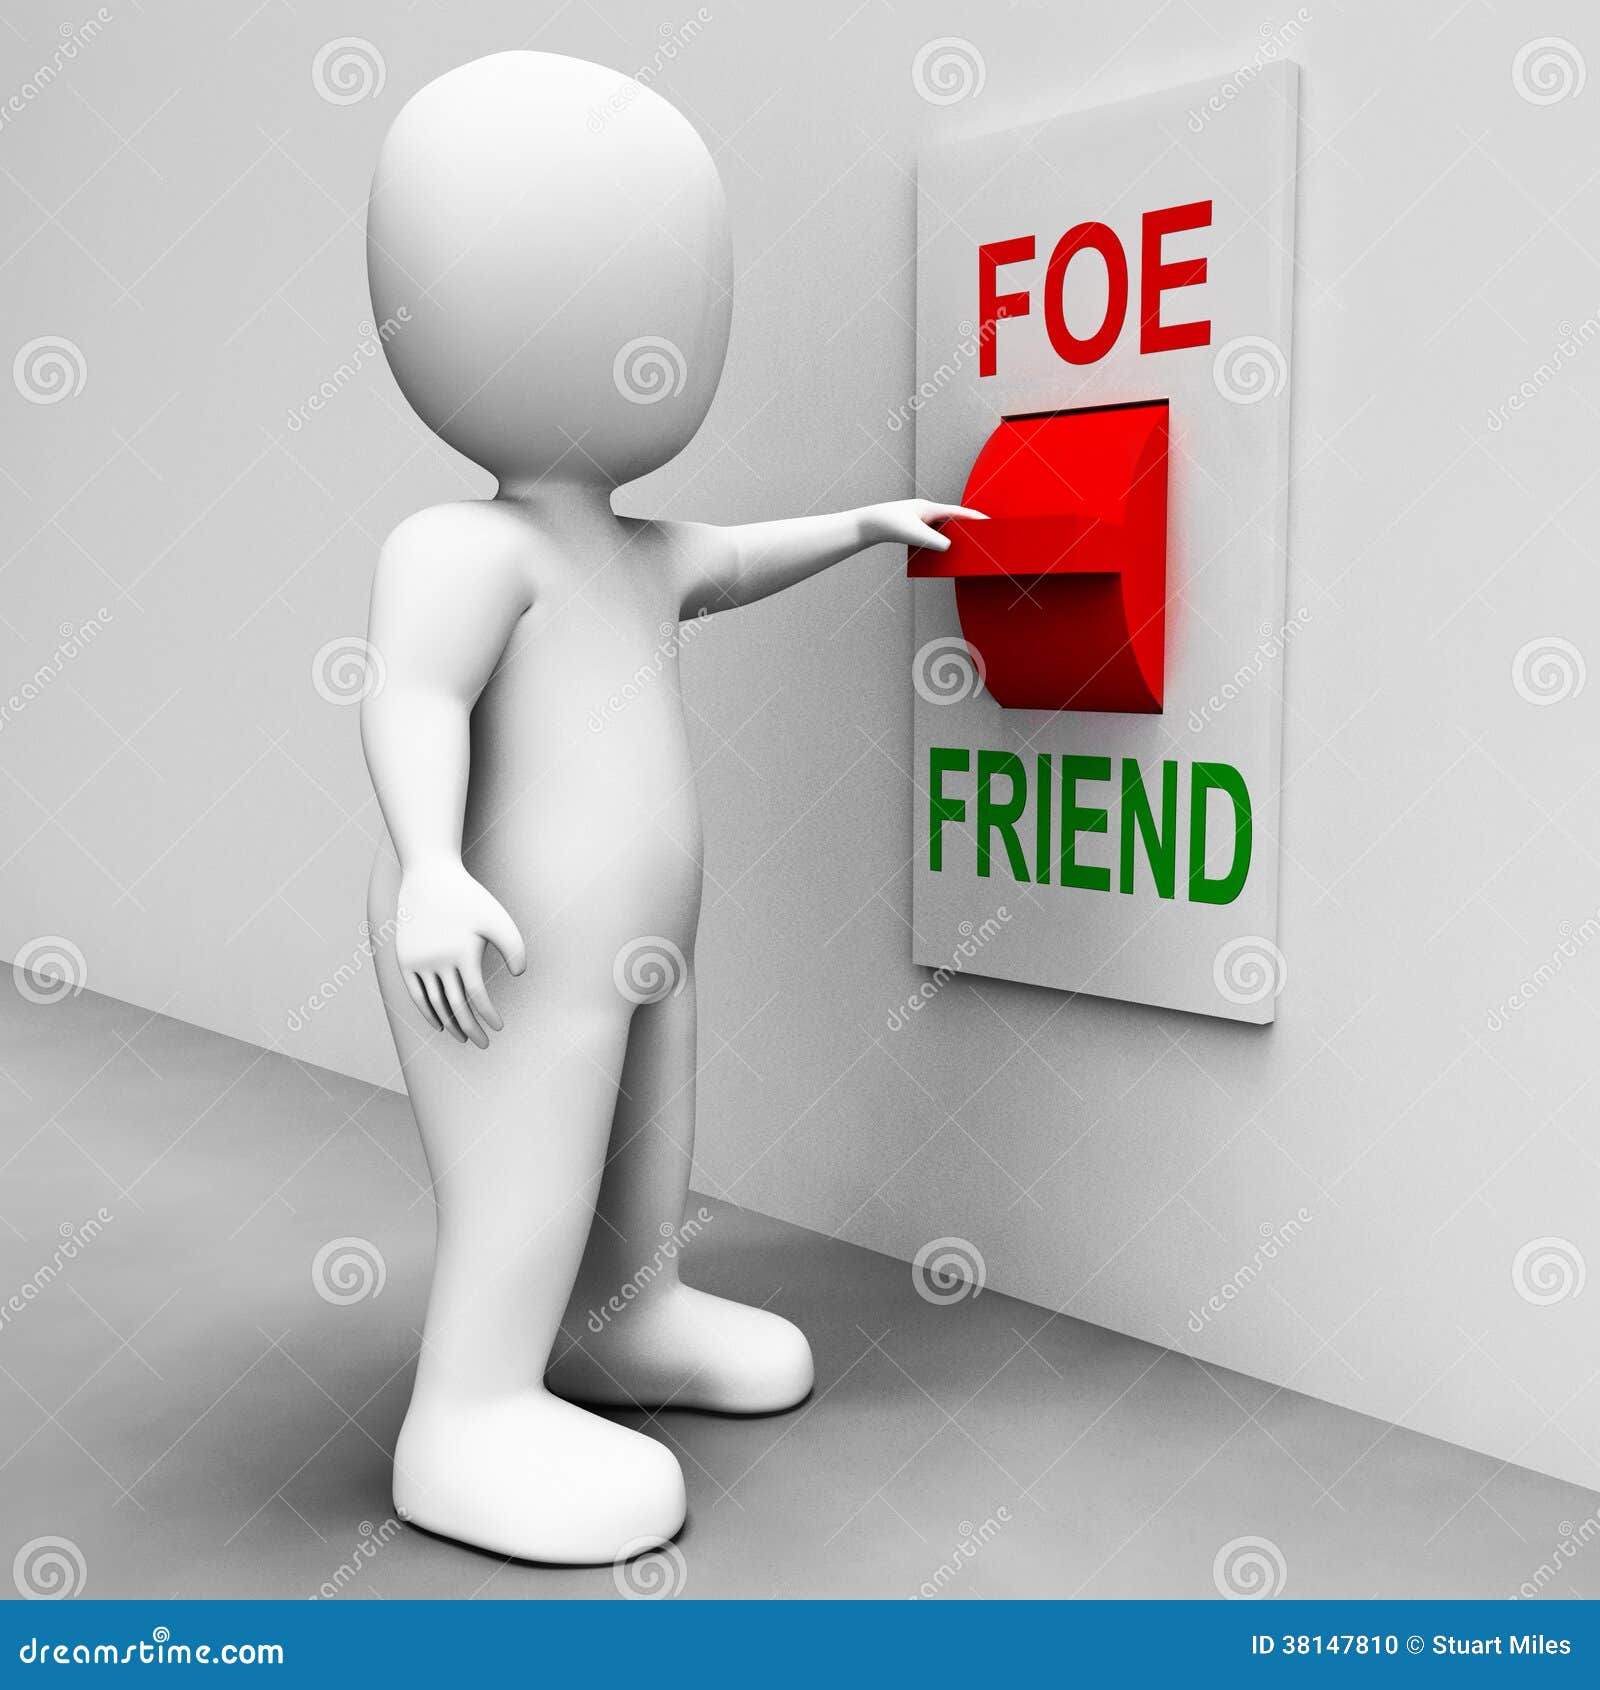 friend foe switch shows ally or enemy